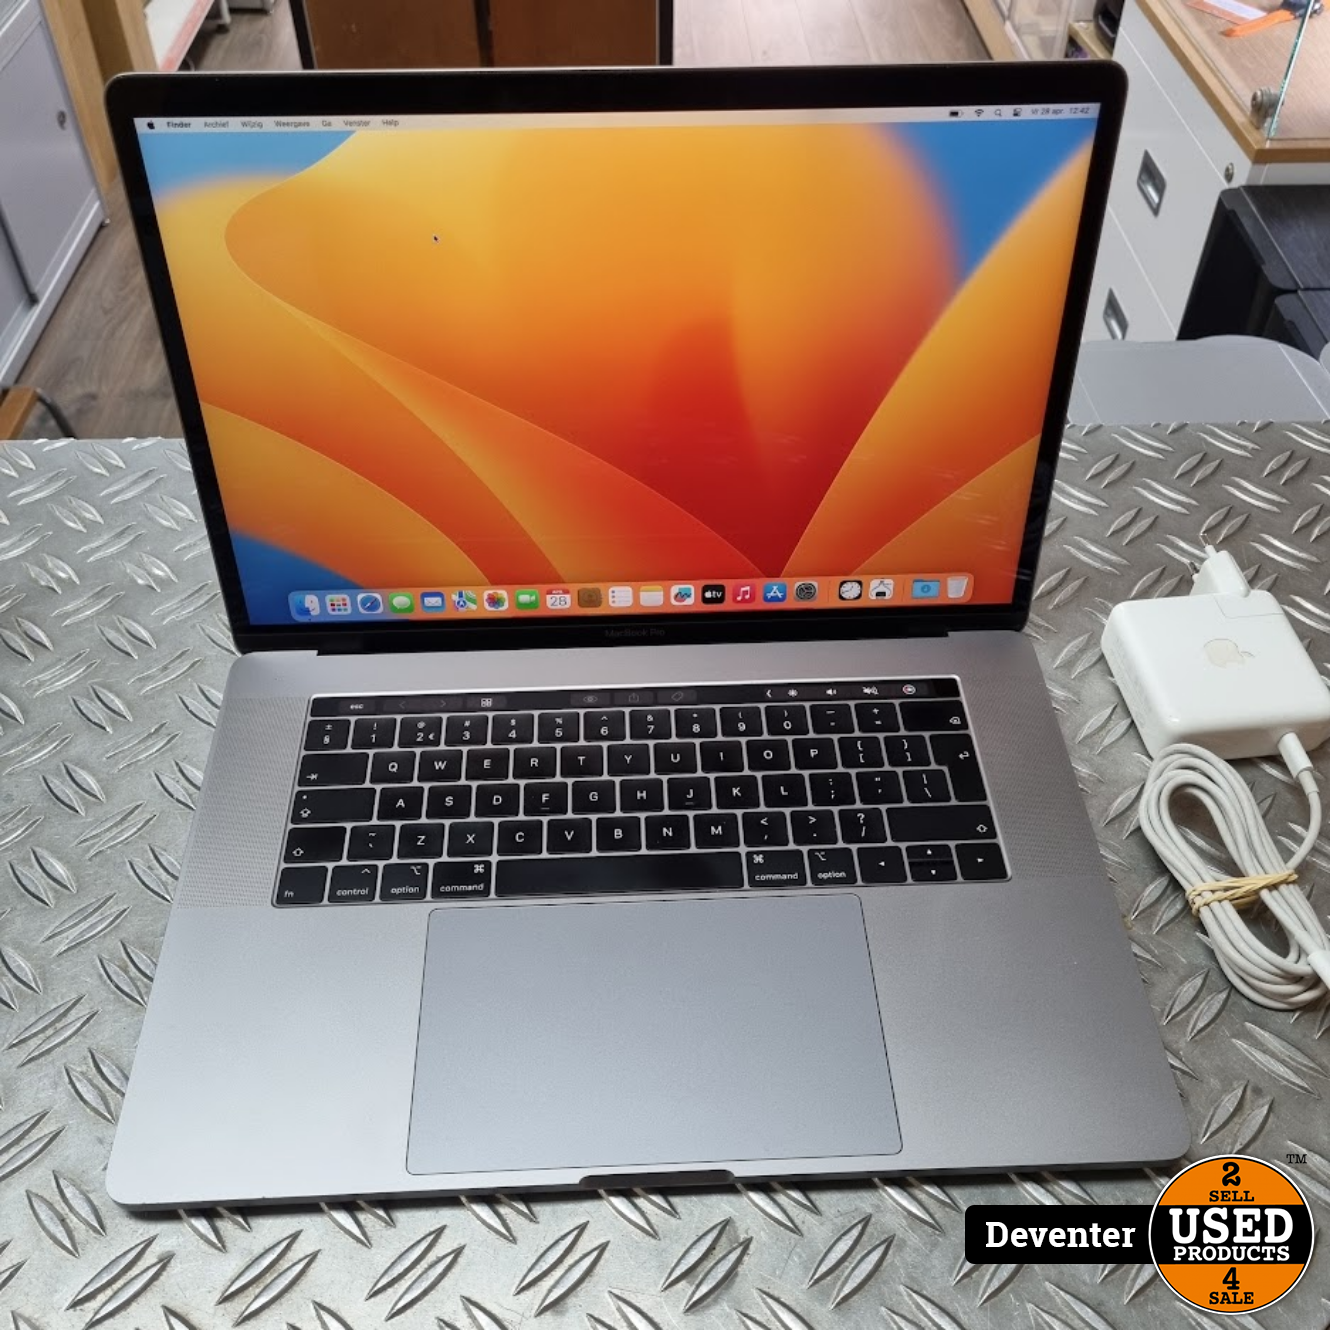 heel fijn sensor spiegel Apple MacBook Pro 15” 2018 II i7 II 16 GB II 256 SSD II Accu 366 - Used  Products Deventer